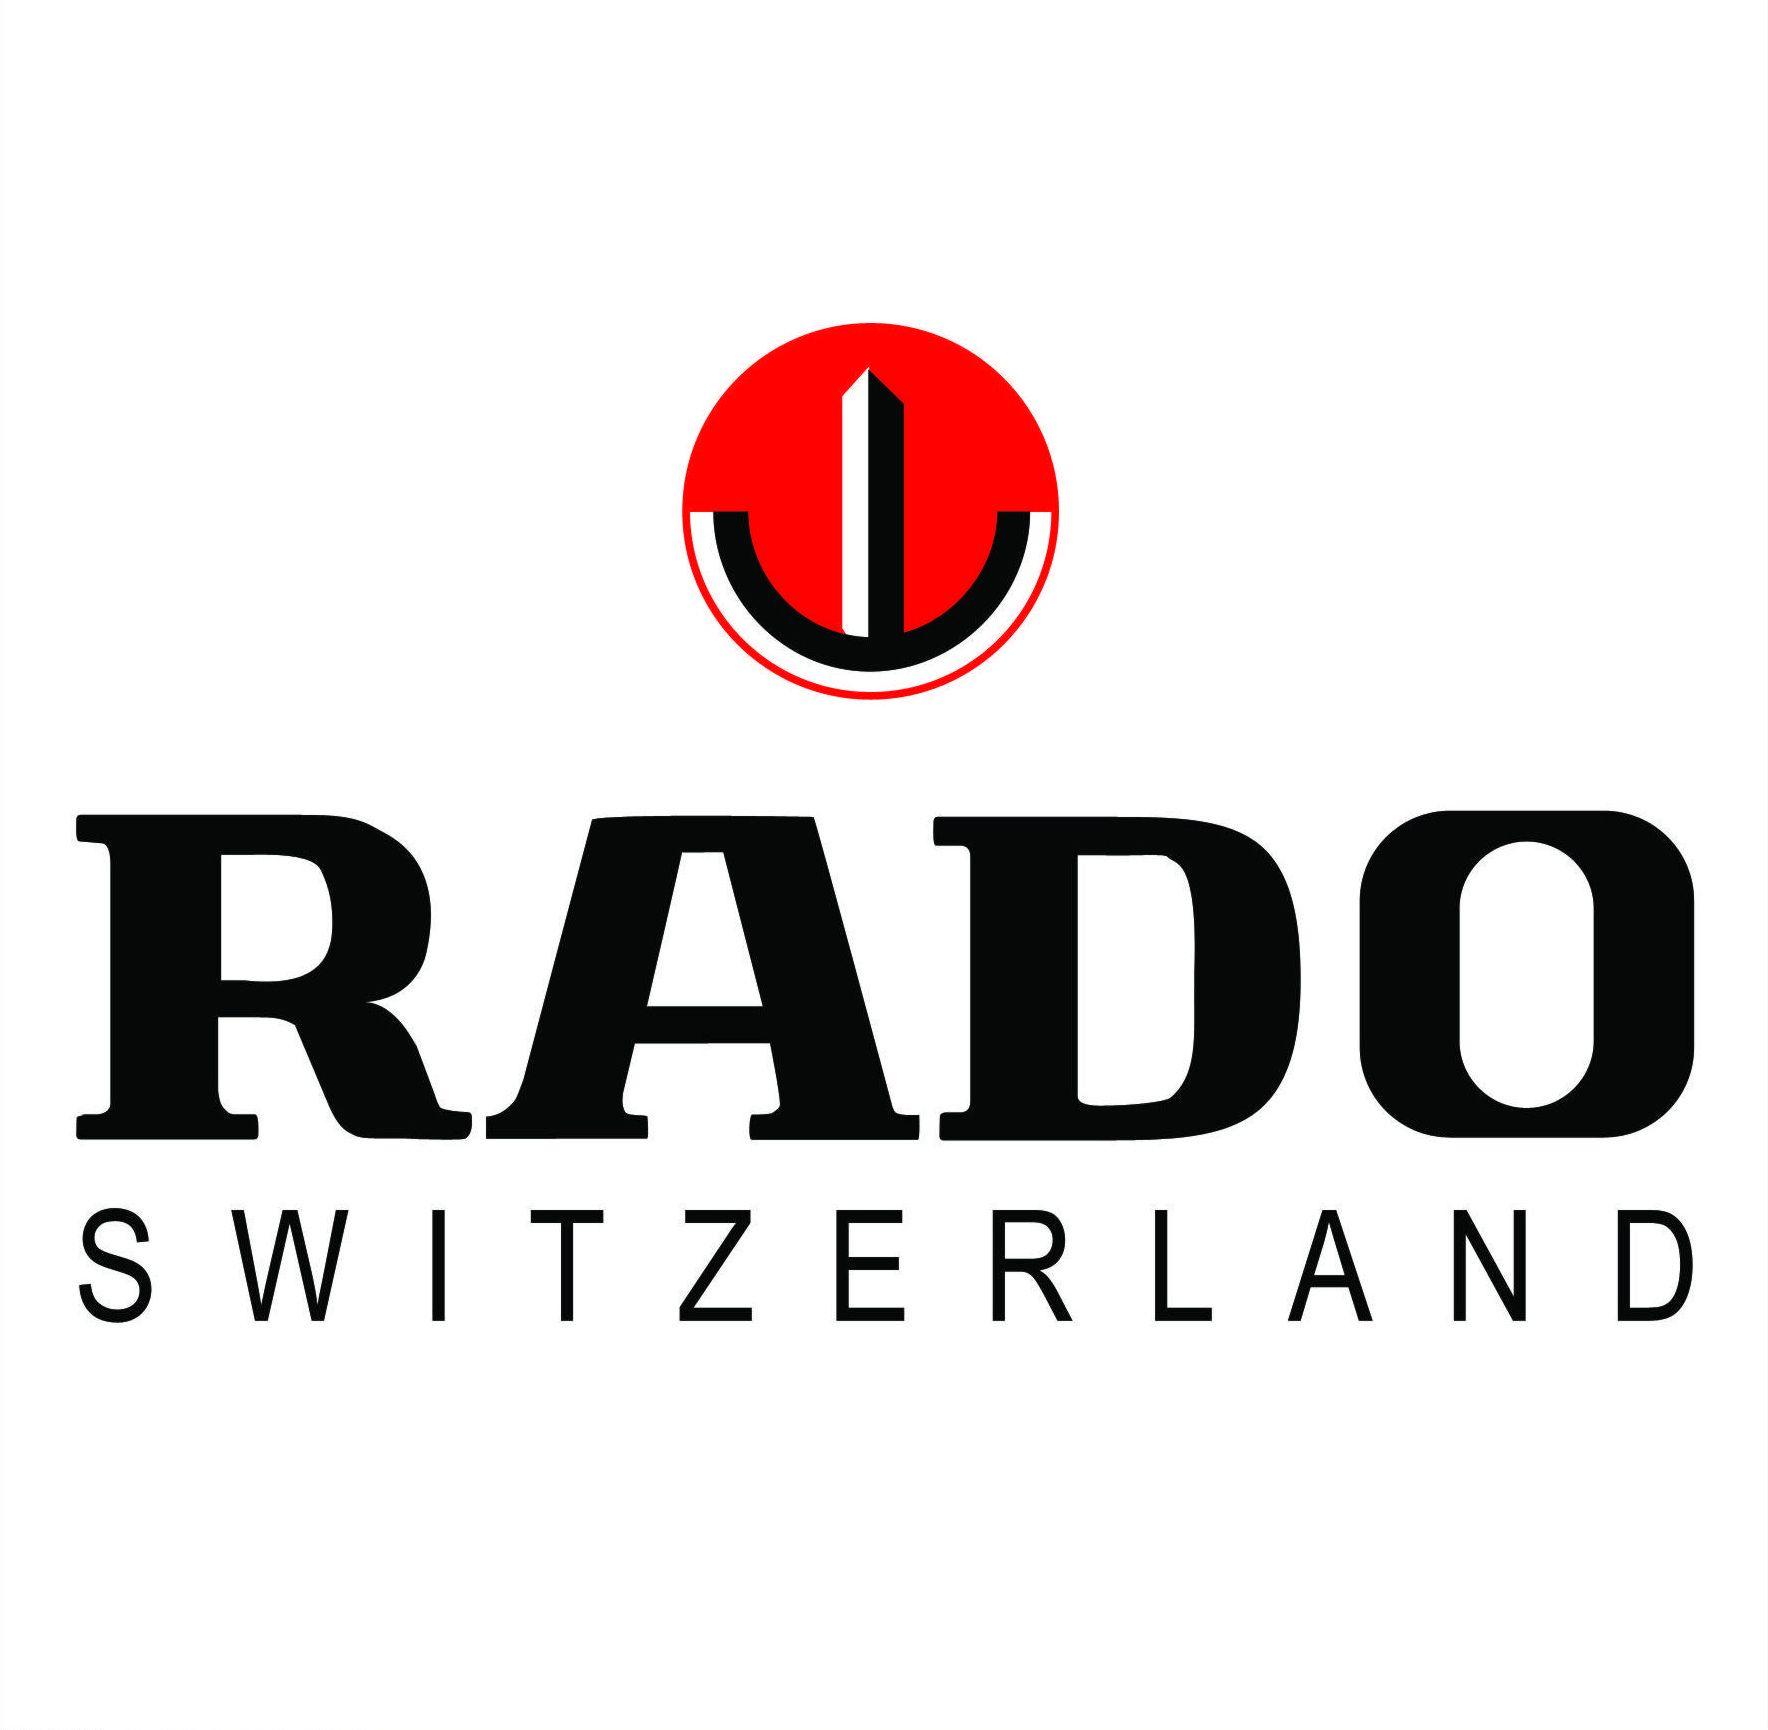 Rado Logo - Image - Rado logos.jpg | Logopedia | FANDOM powered by Wikia